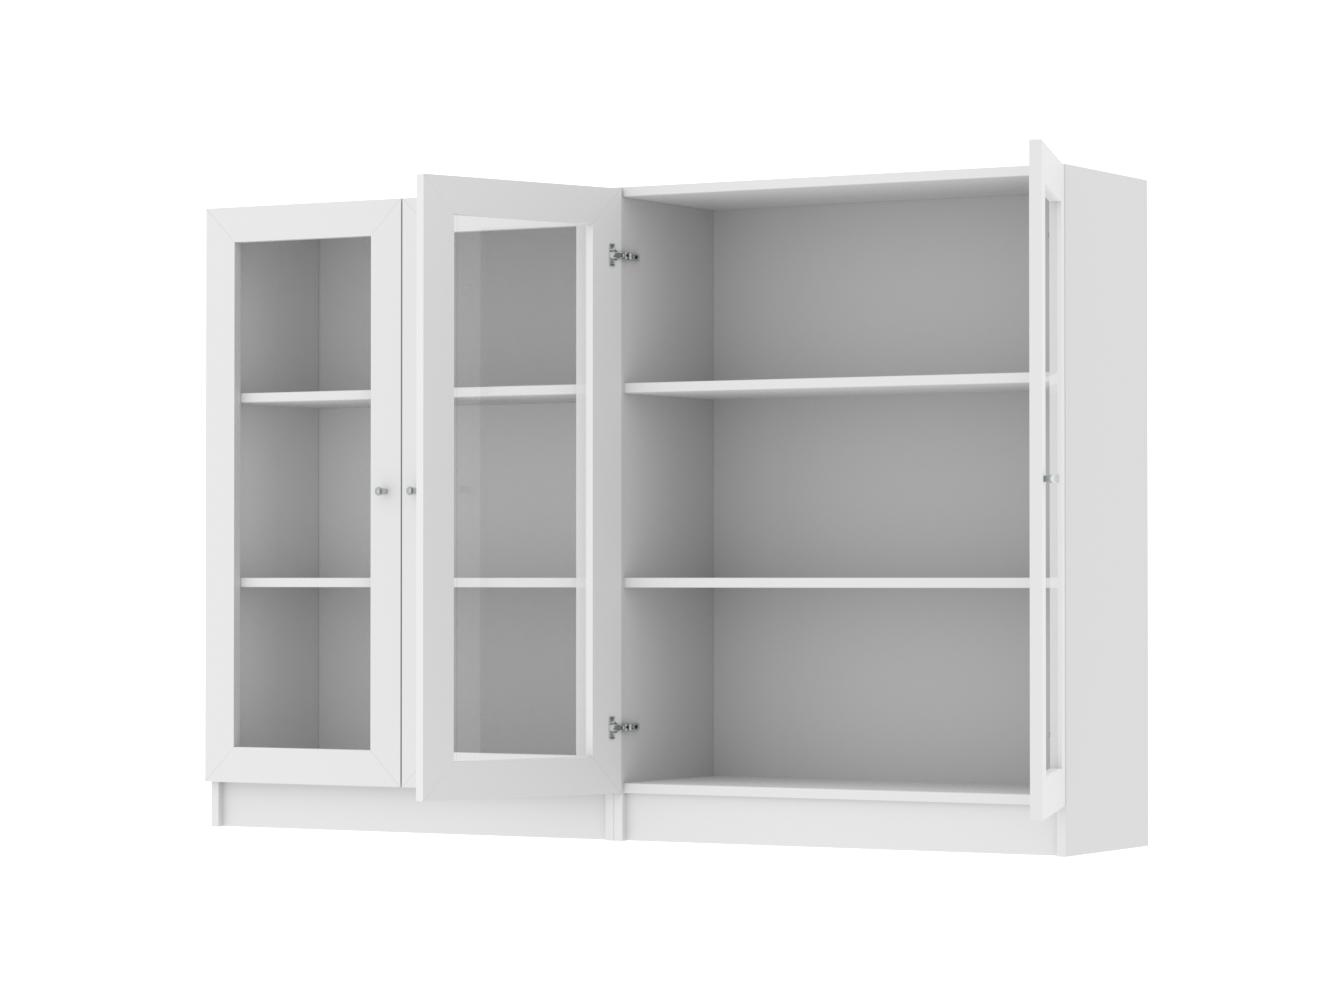  Книжный шкаф Билли 328 white ИКЕА (IKEA) изображение товара